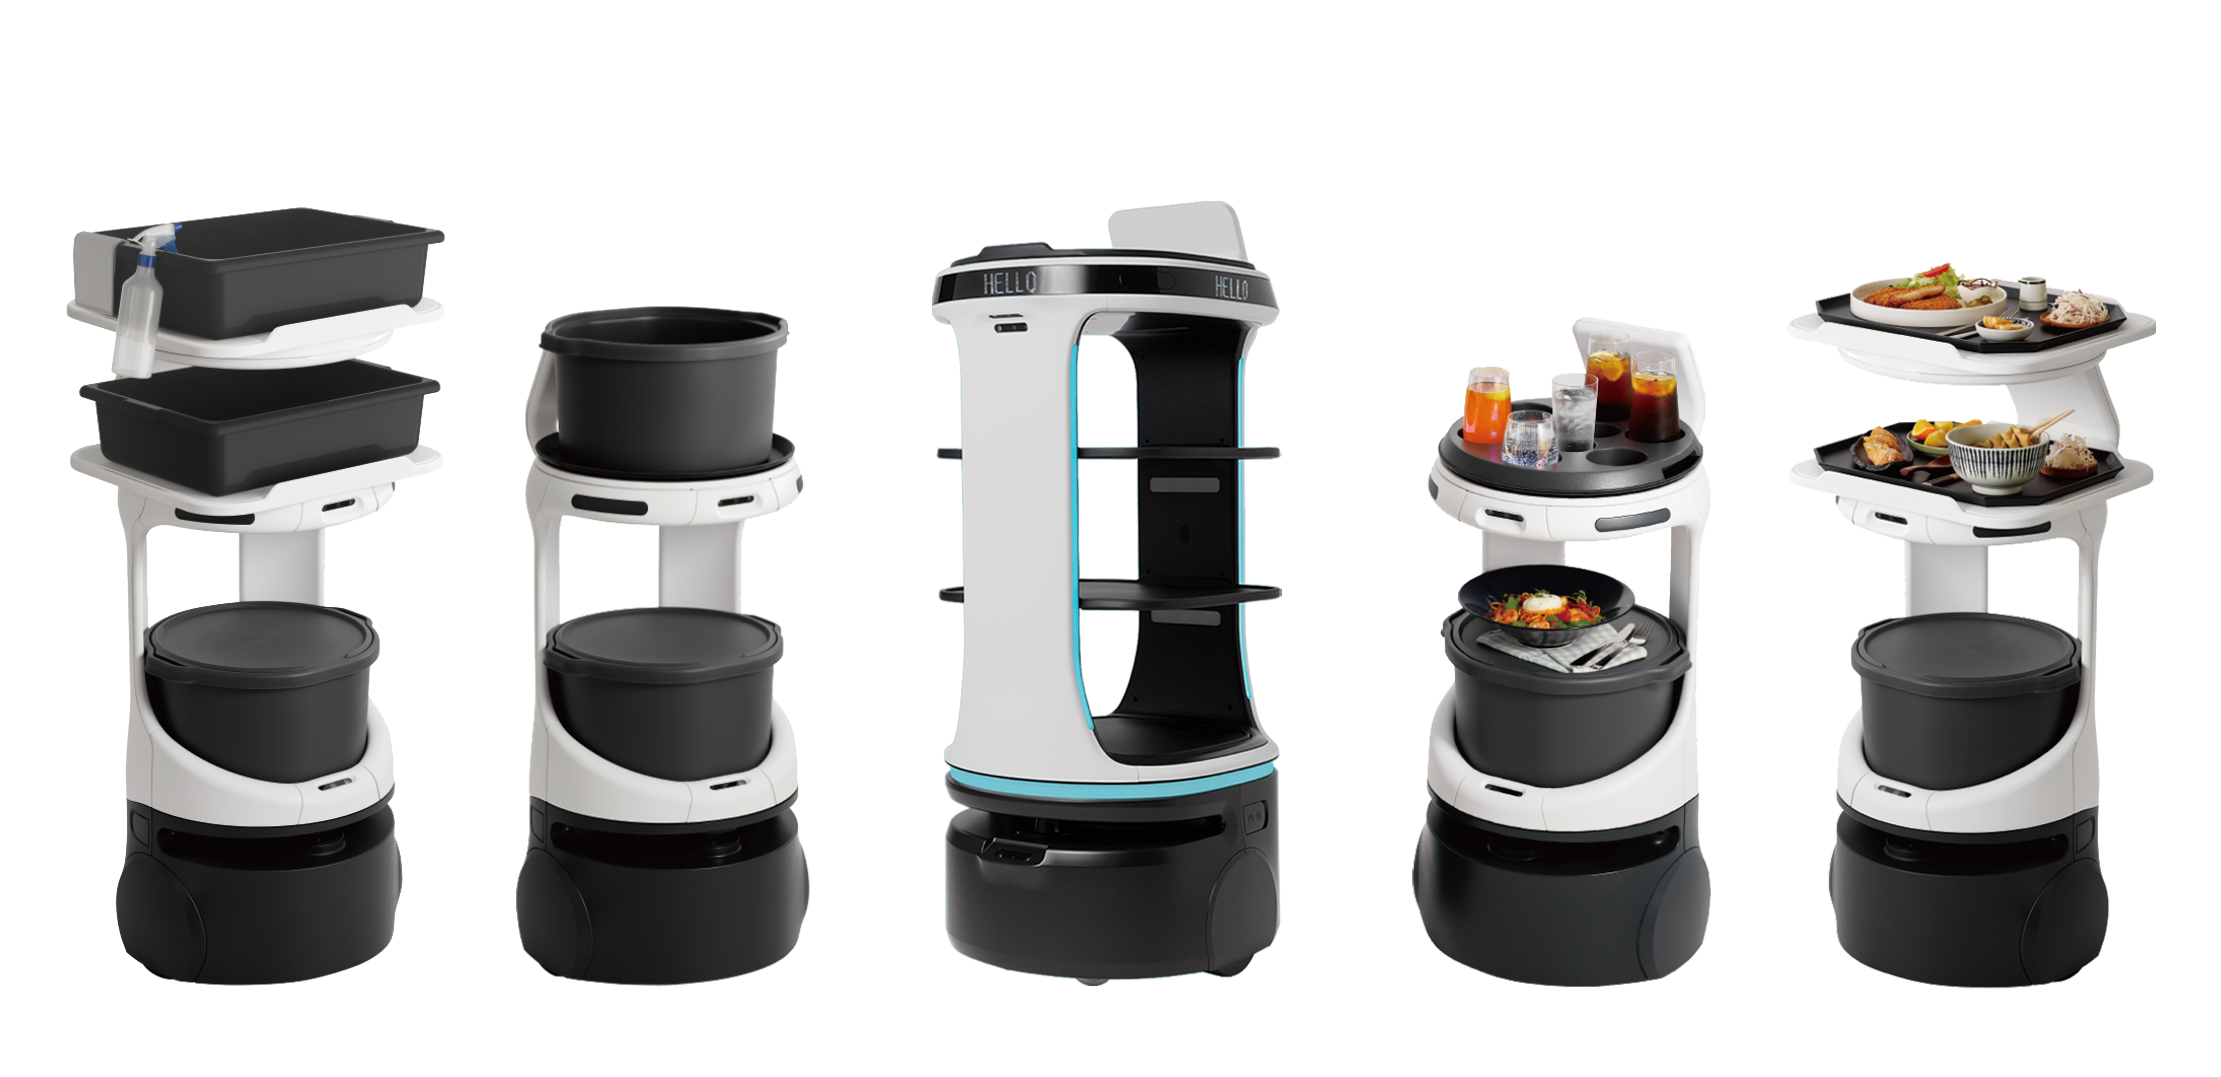 Food service robots, Bear Robotics SERVI and SERVI Mini models from MetaDolce Technologies